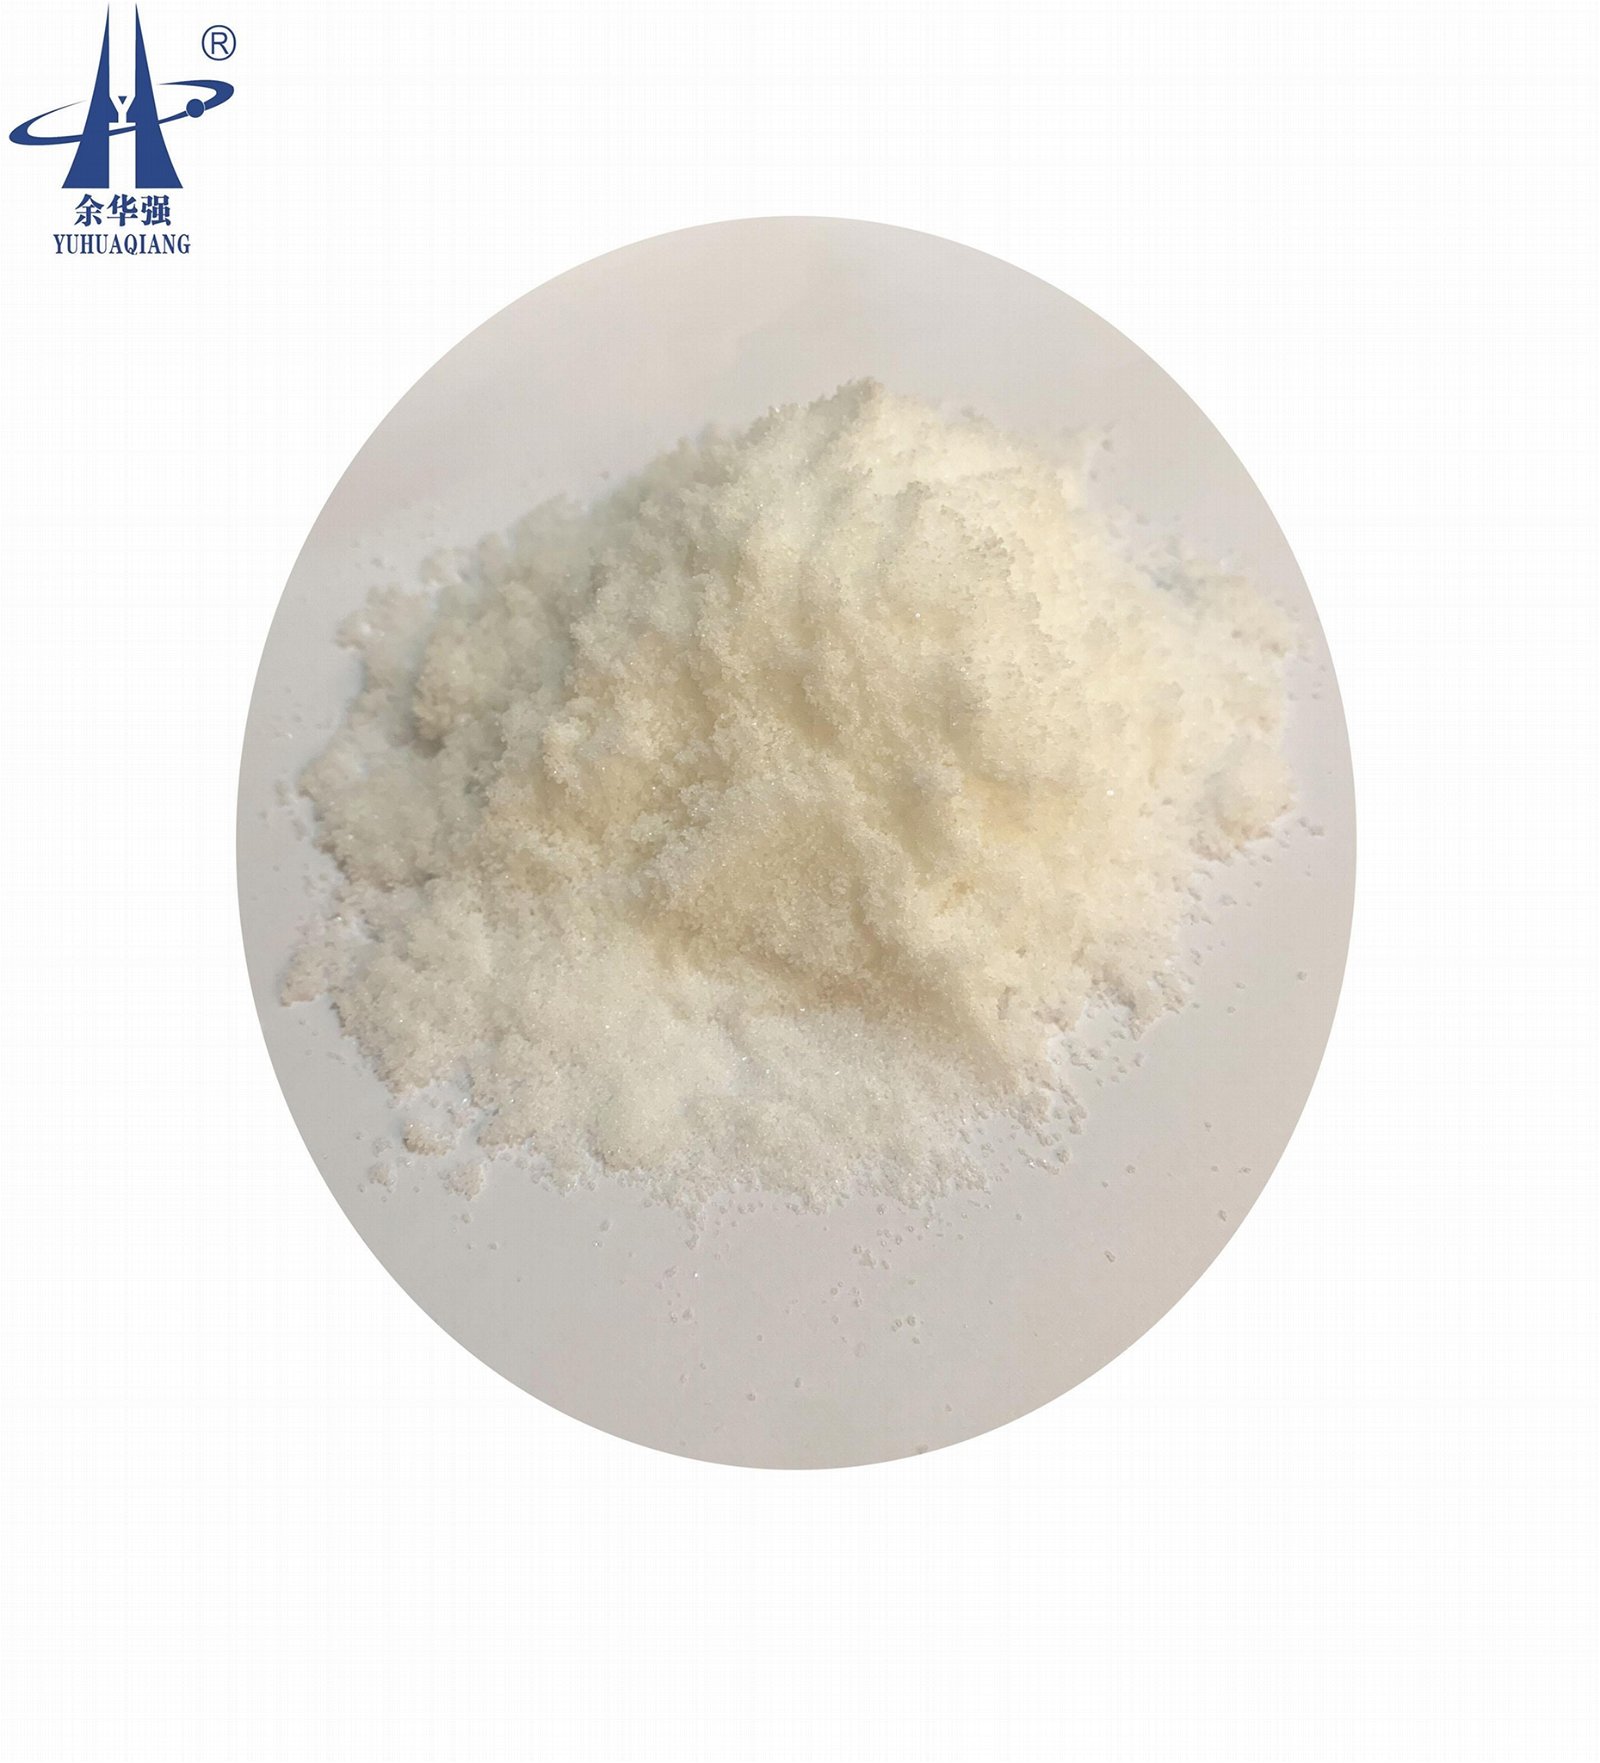 pure granules Sodium nitrate industrial grade 99+% free-flow industrial processi